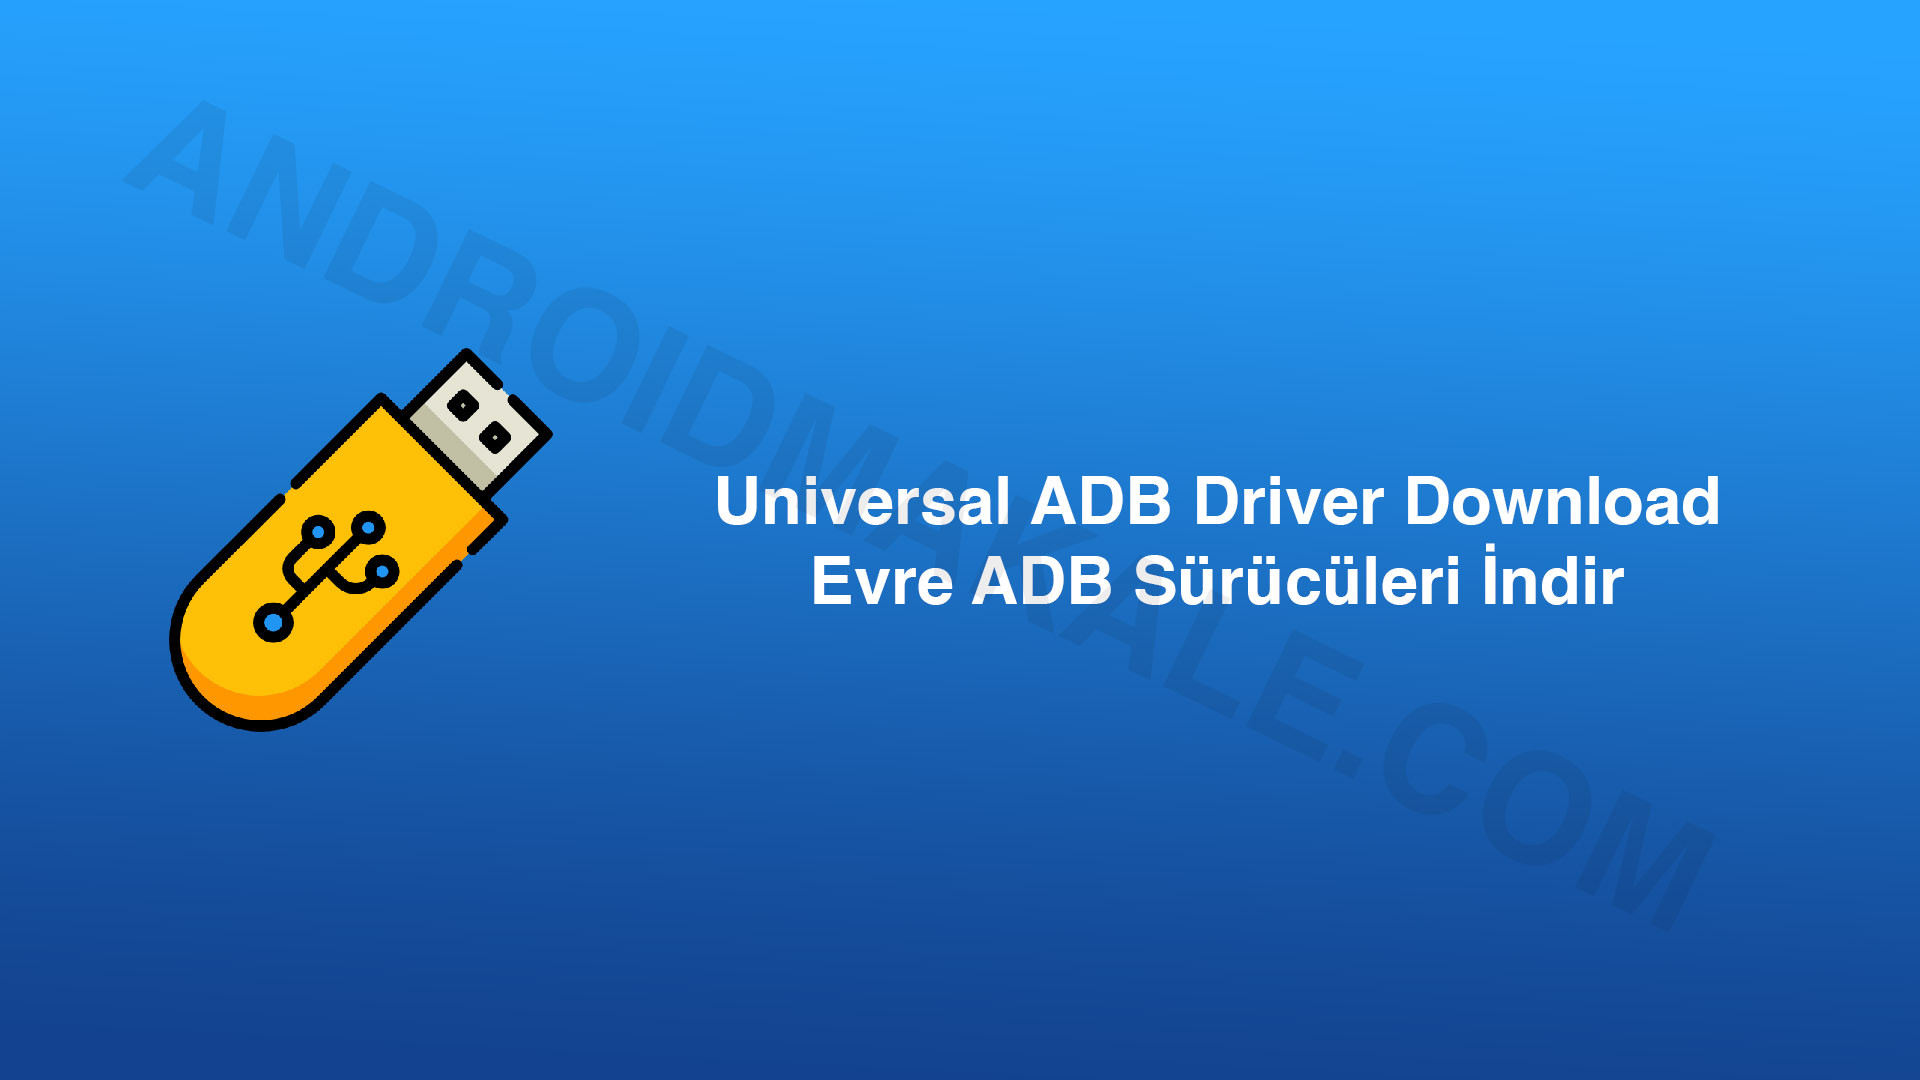 Universal ADB Driver Download Universal ADB Driver indir download adb sürücüleri indir 